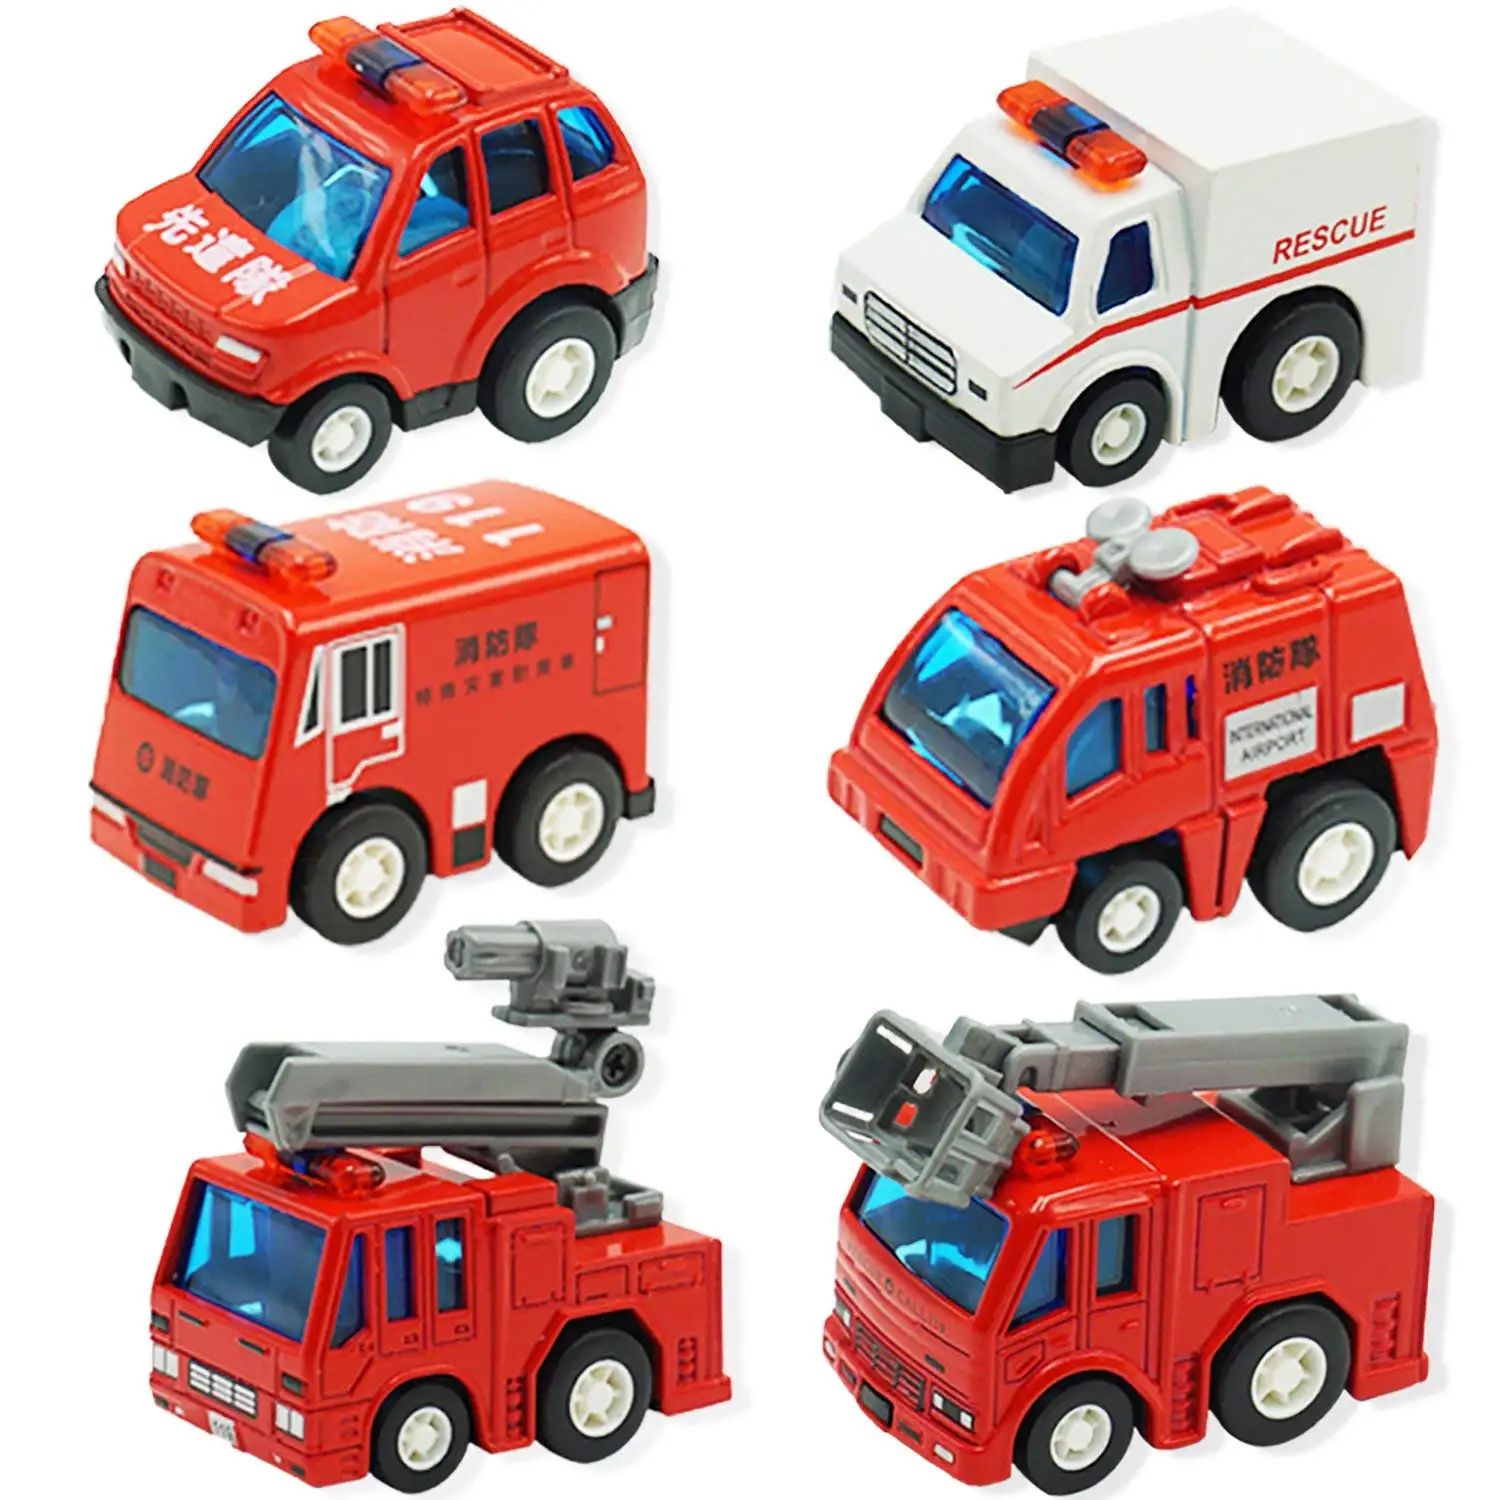 Toys 911 Fire Truck Emergency Response Team Fire Engine Ladder by Techege